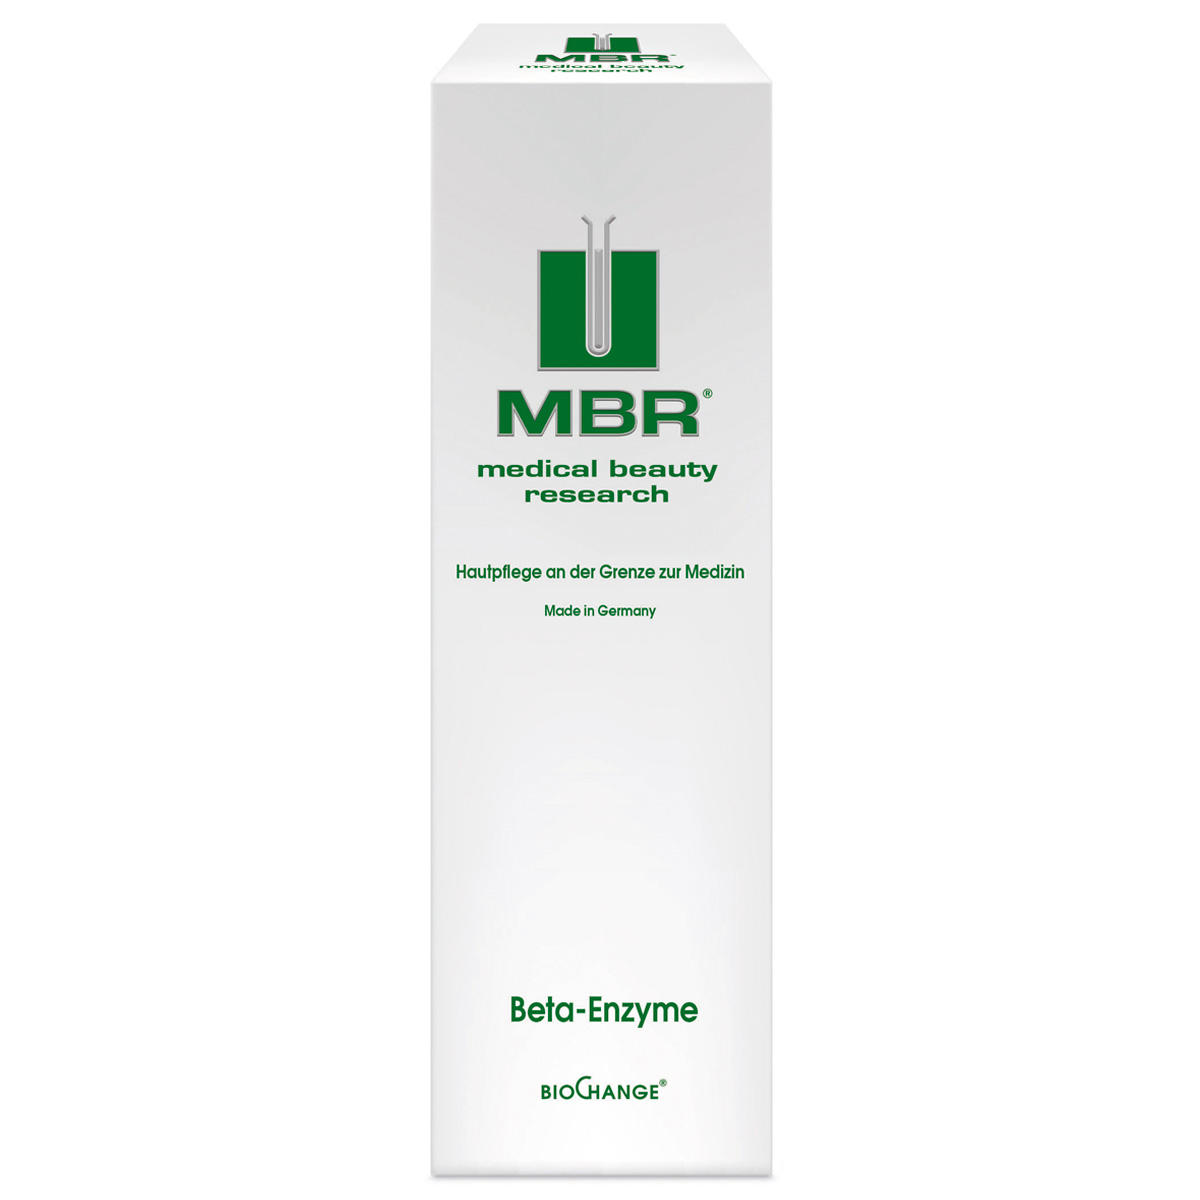 MBR Medical Beauty Research BioChange Research Beta-Enzyme 100 ml - 3